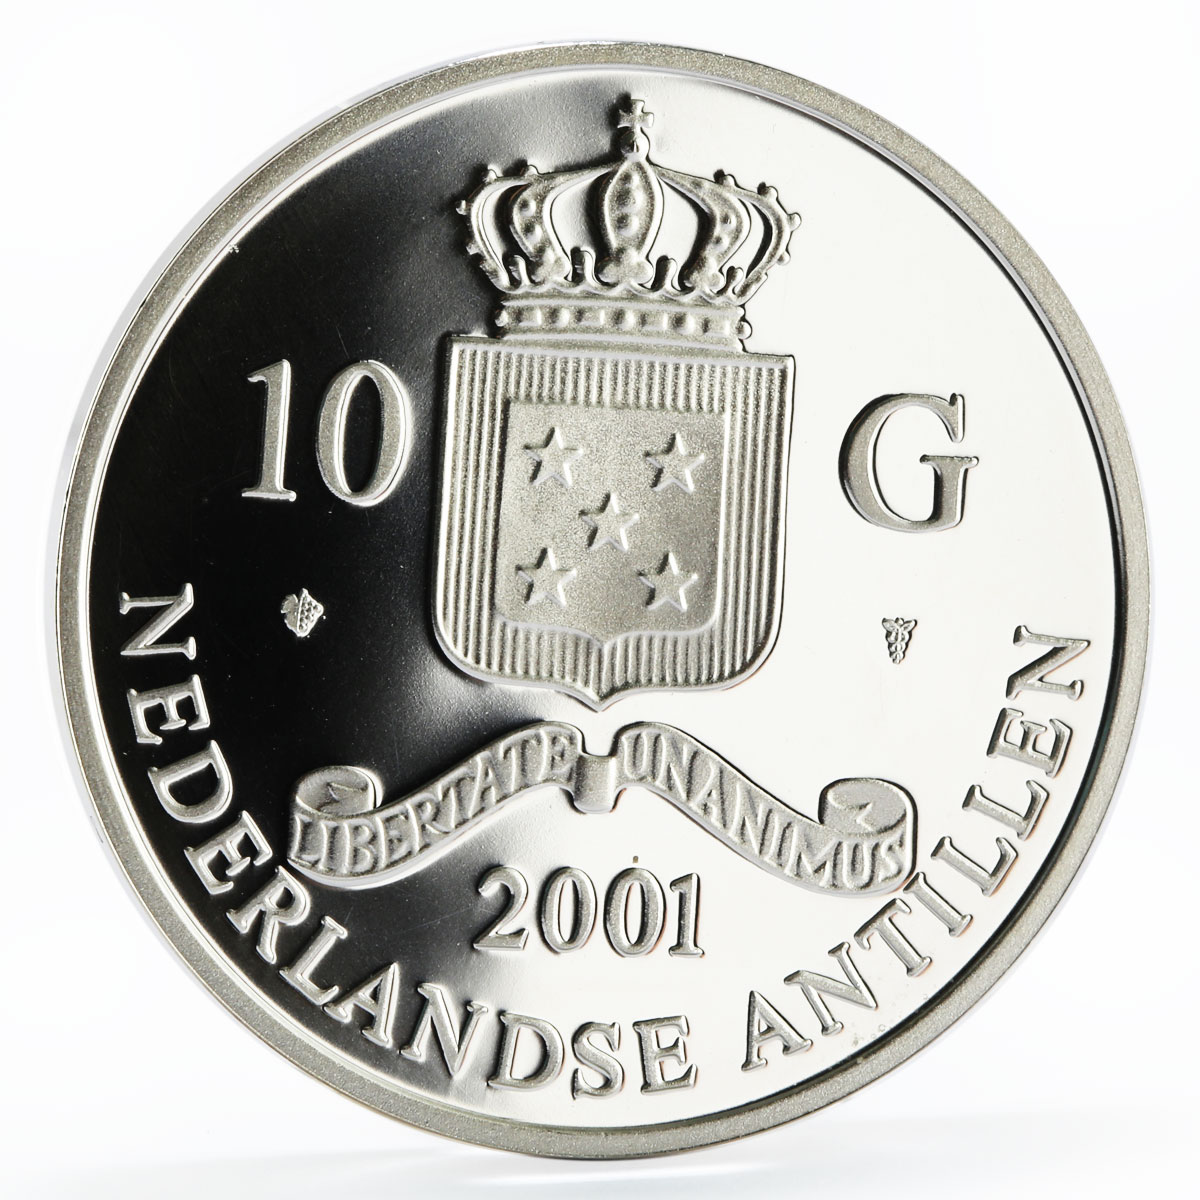 Netherlands Antilles 10 gulden Philipp VI gilded proof silver coin 2001